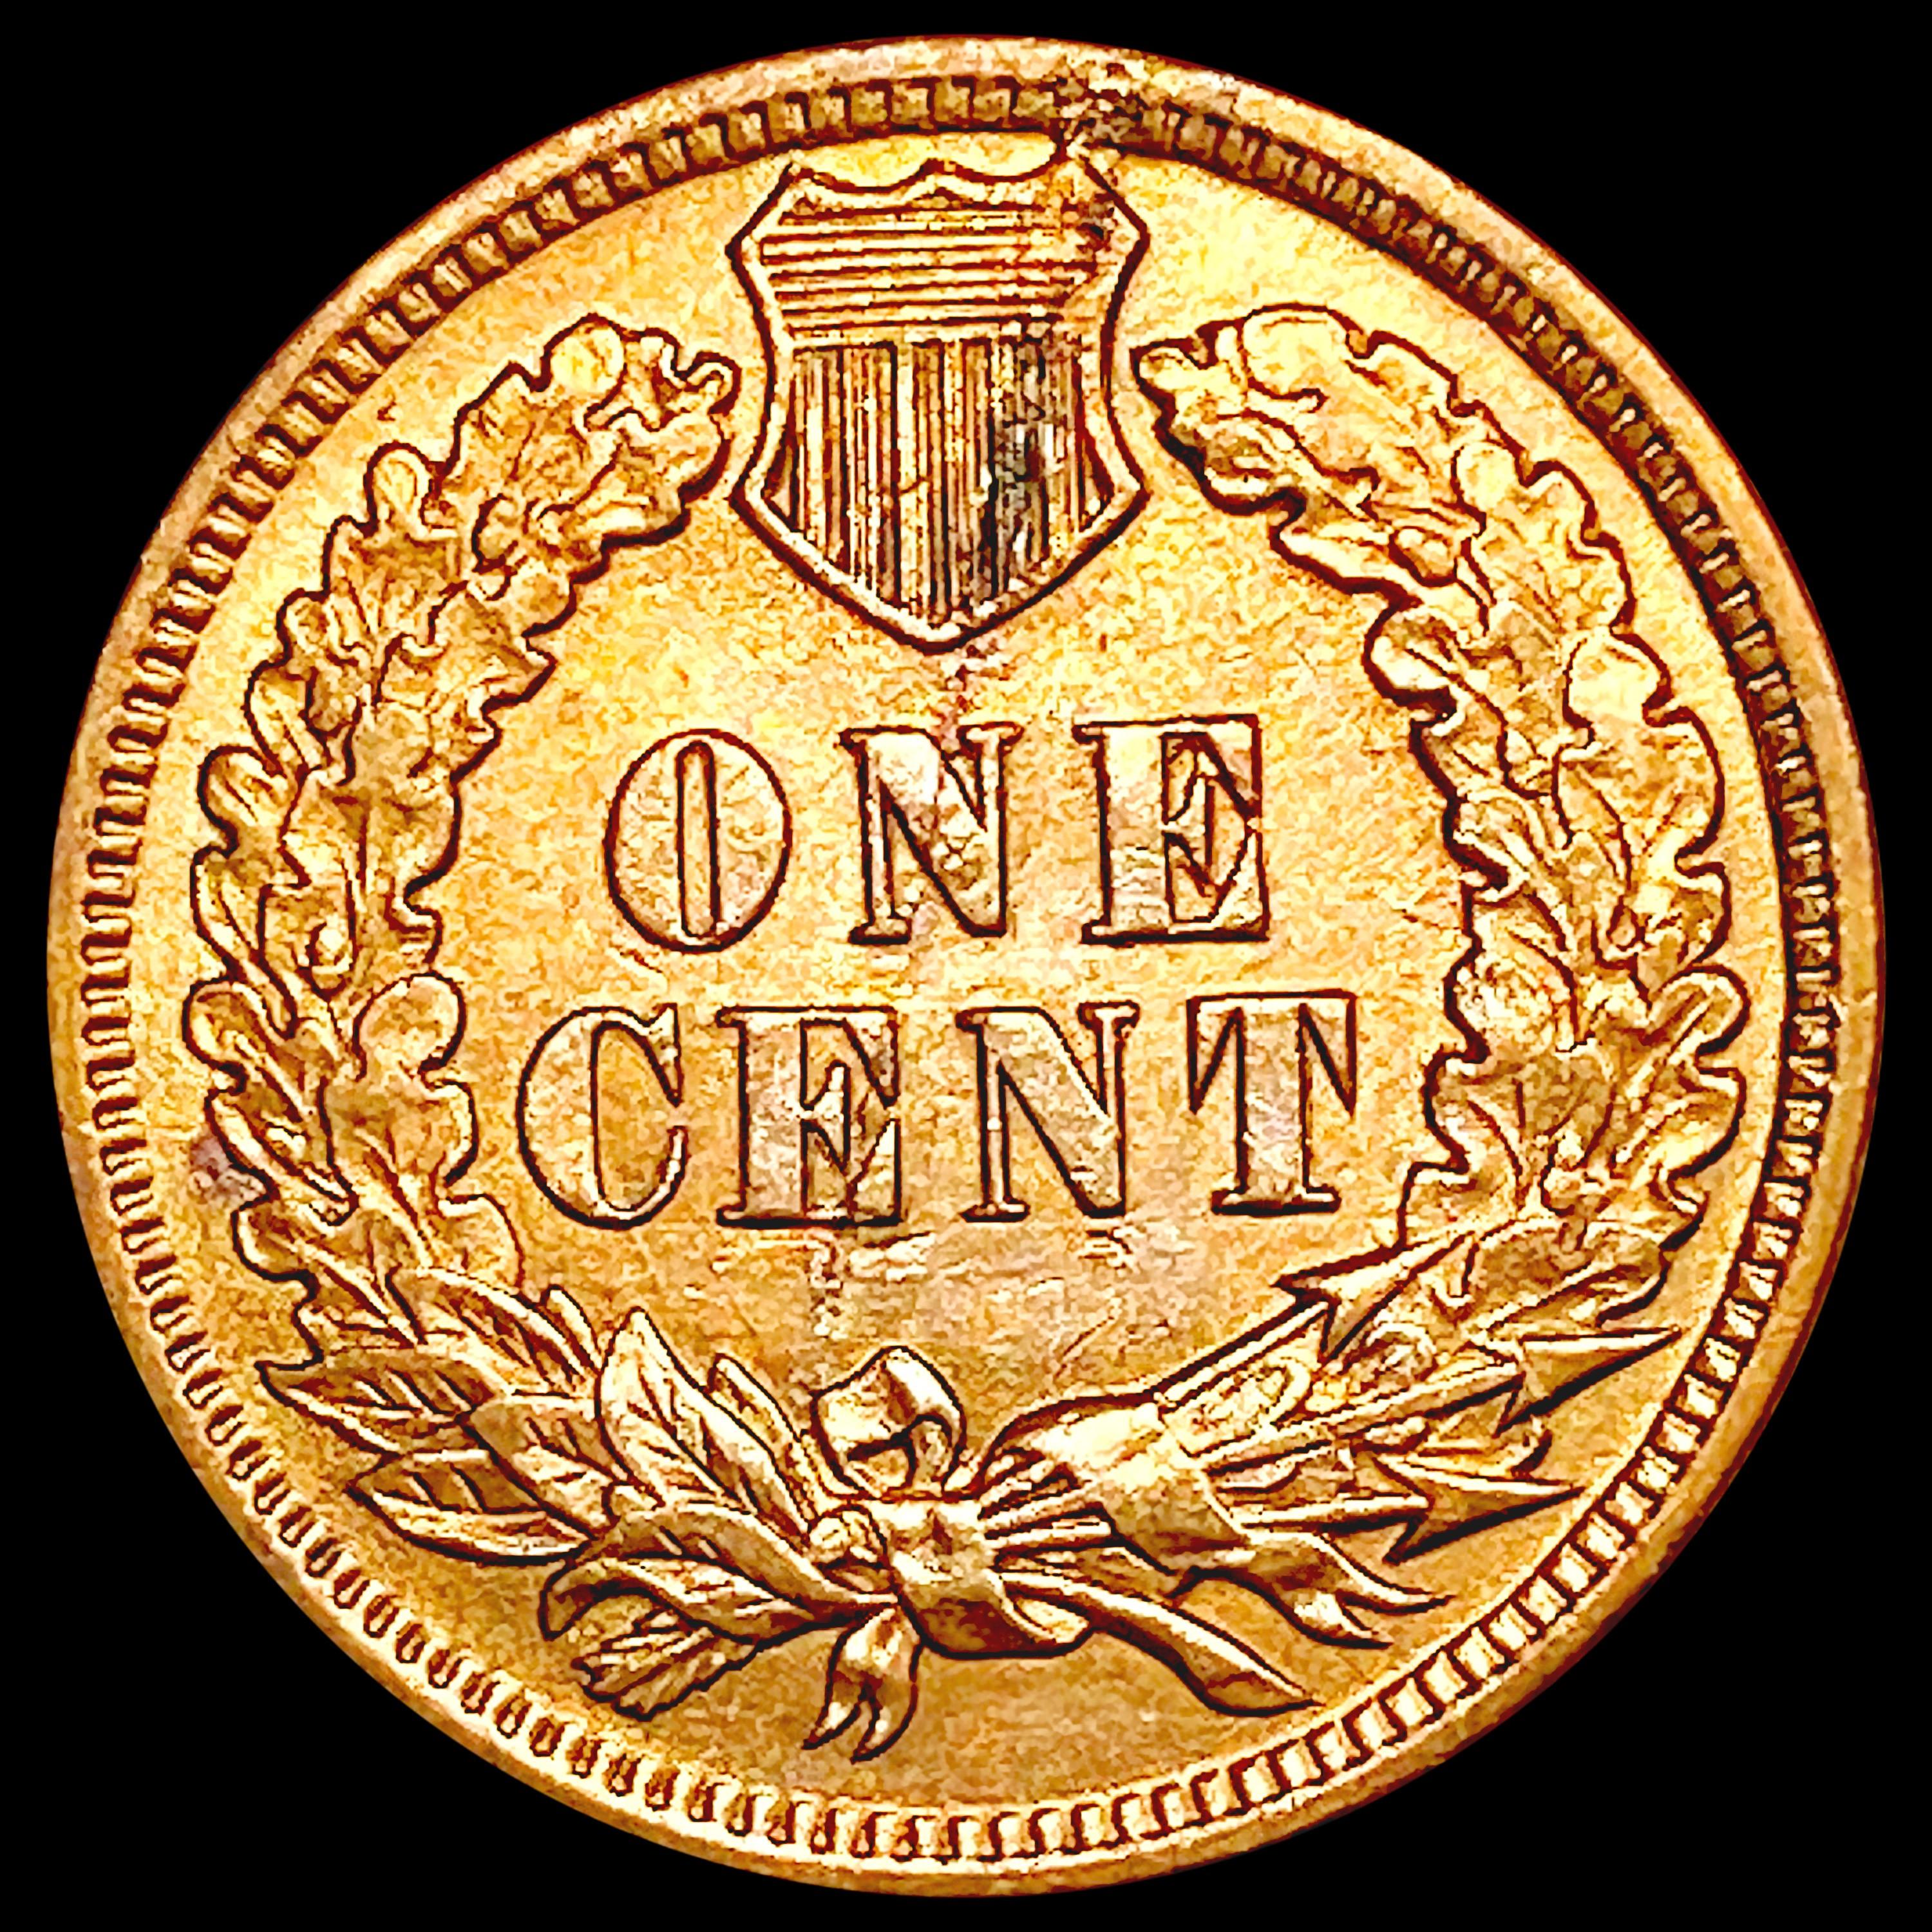 1903 Indian Head Cent GEM BU